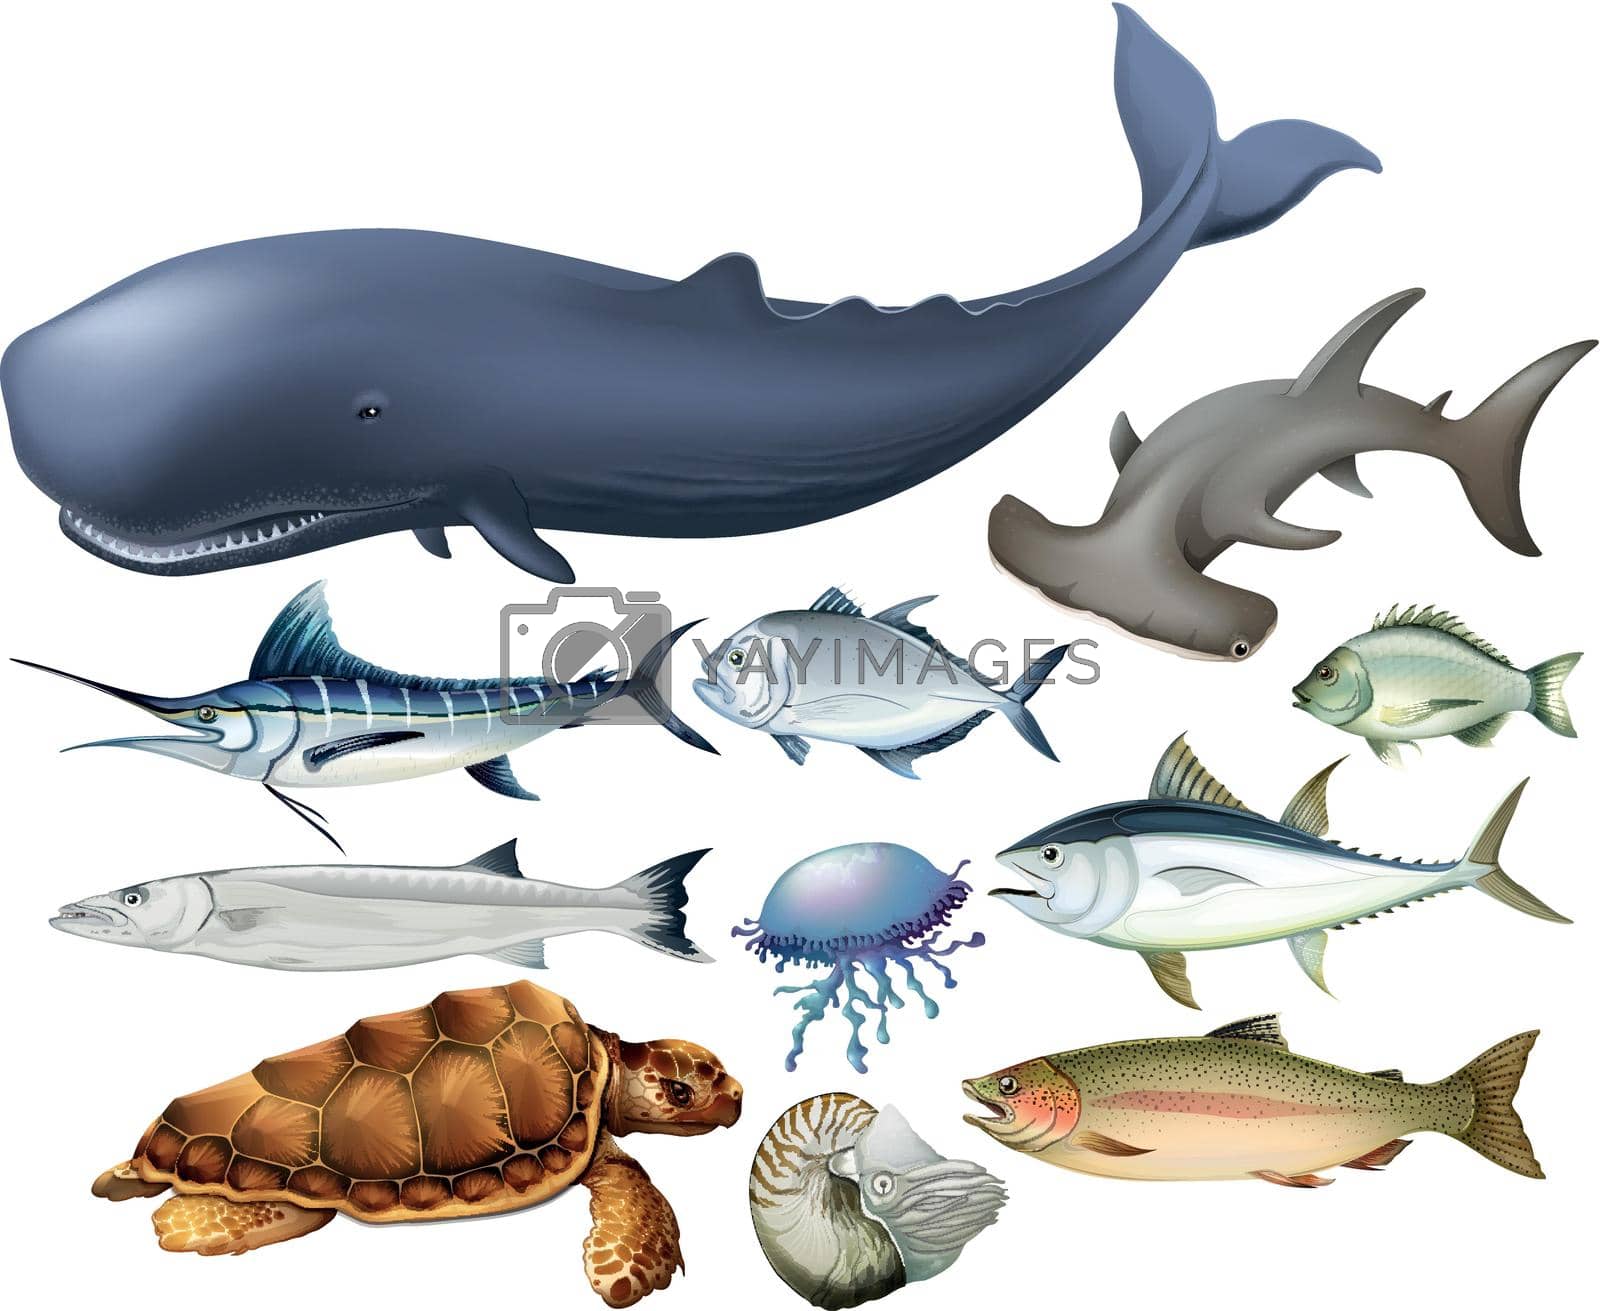 Aquatic animals on white illustration